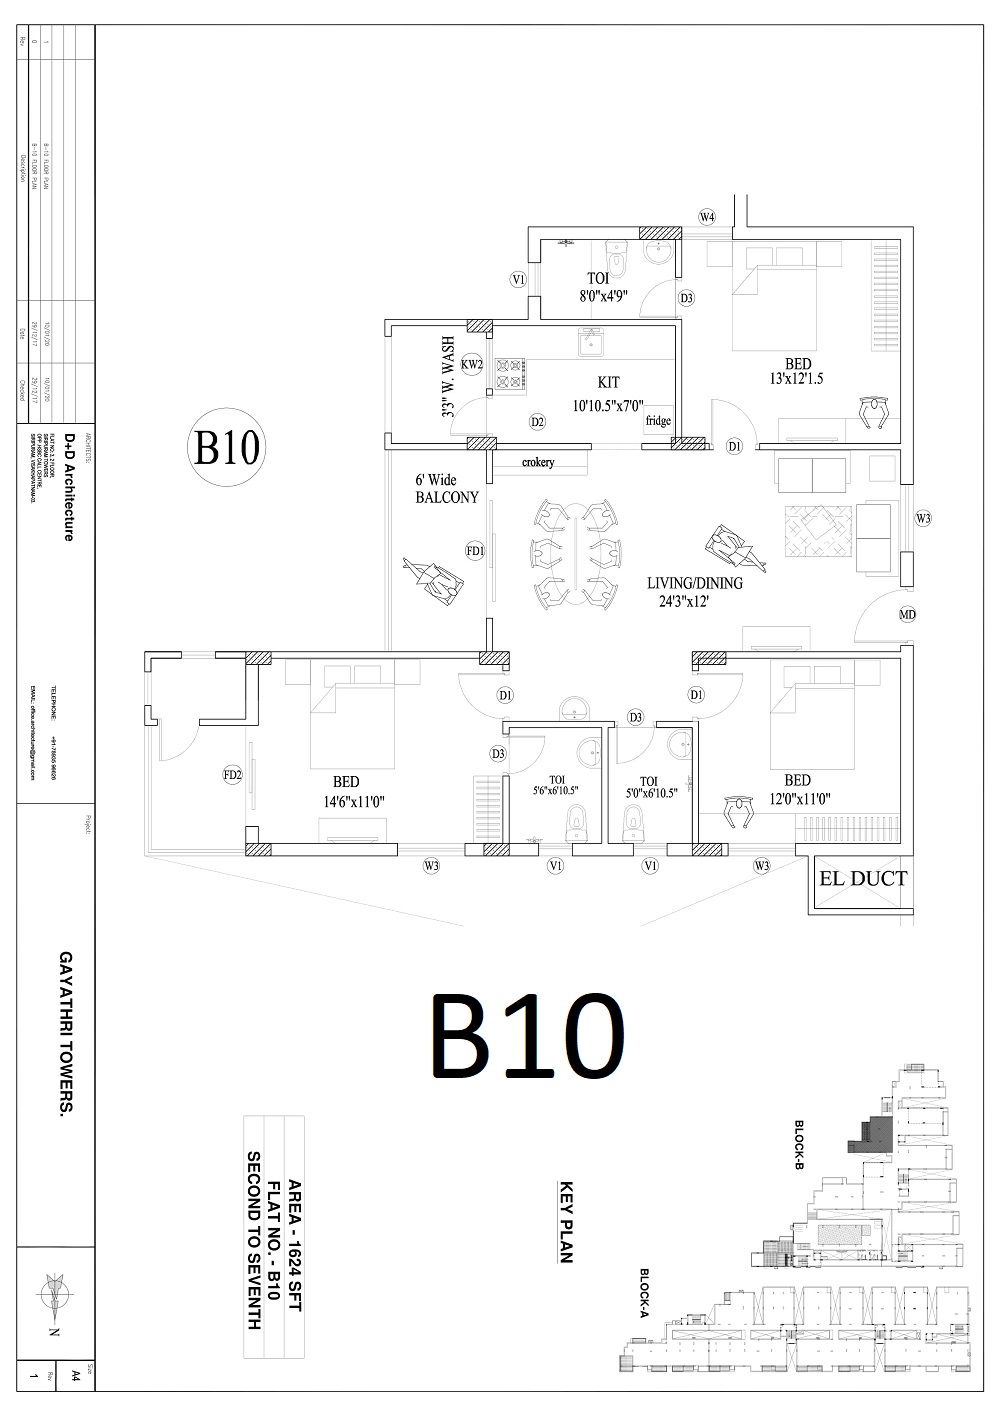 B10 - Tipcal Floor Plan